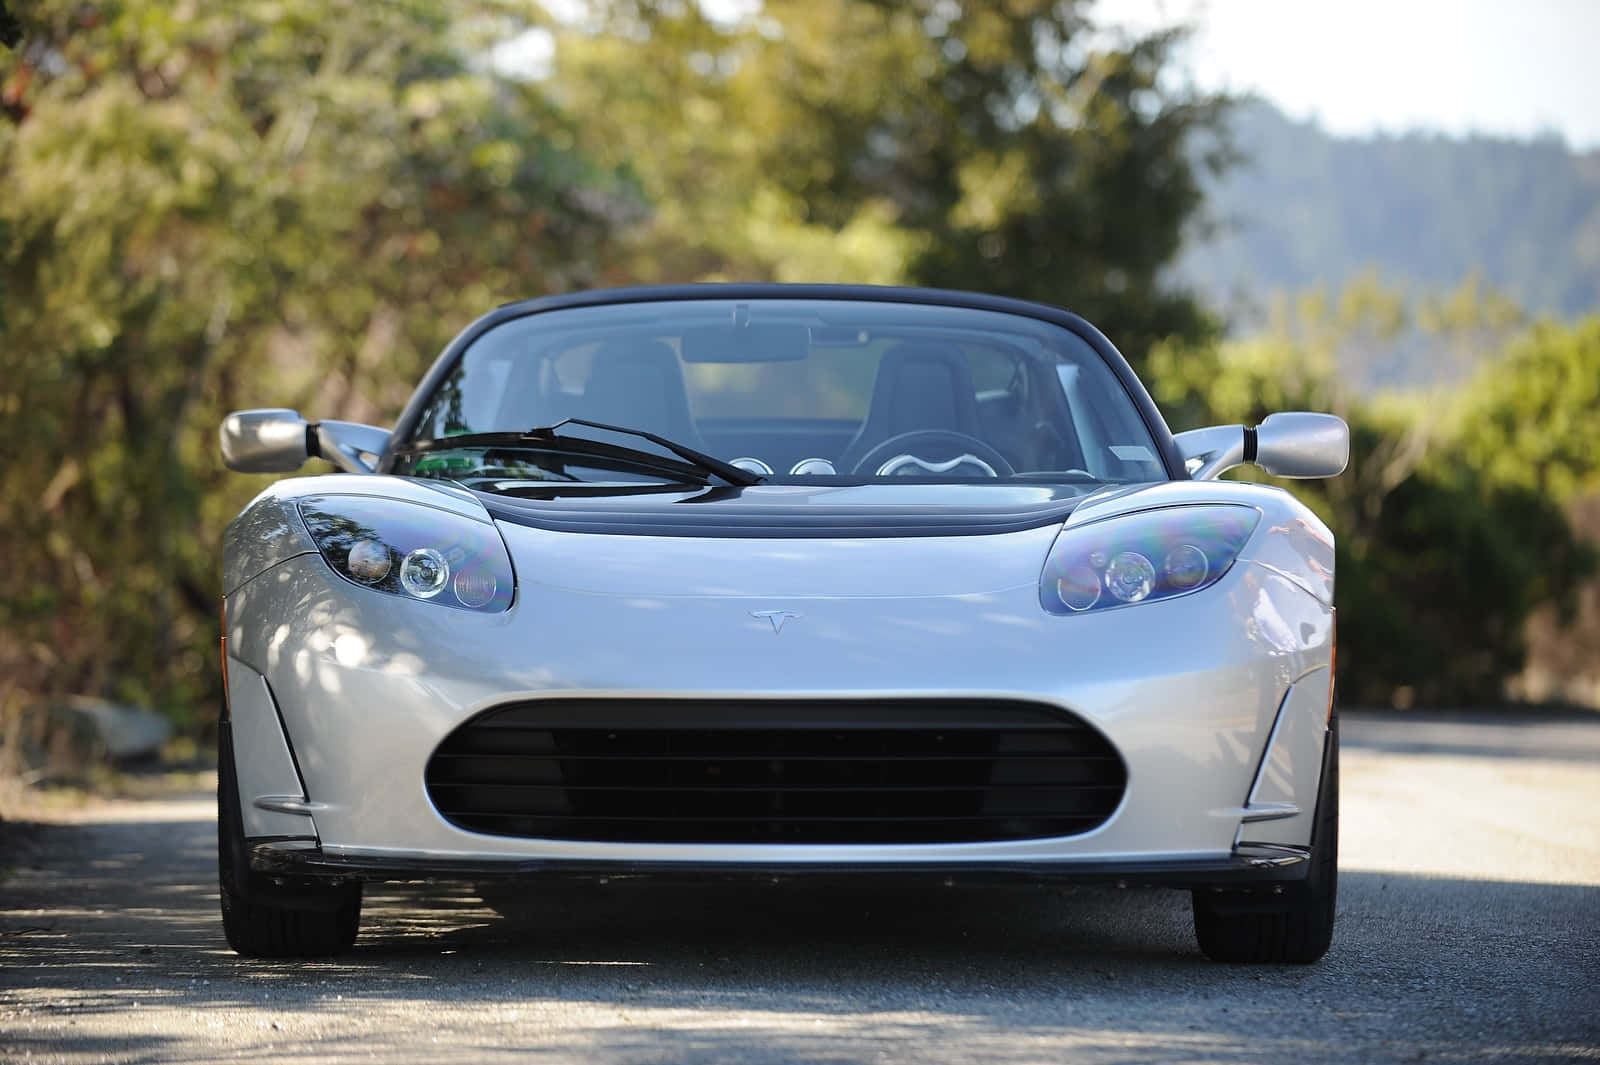 Luxurious Tesla Roadster - Innovation Meets Performance